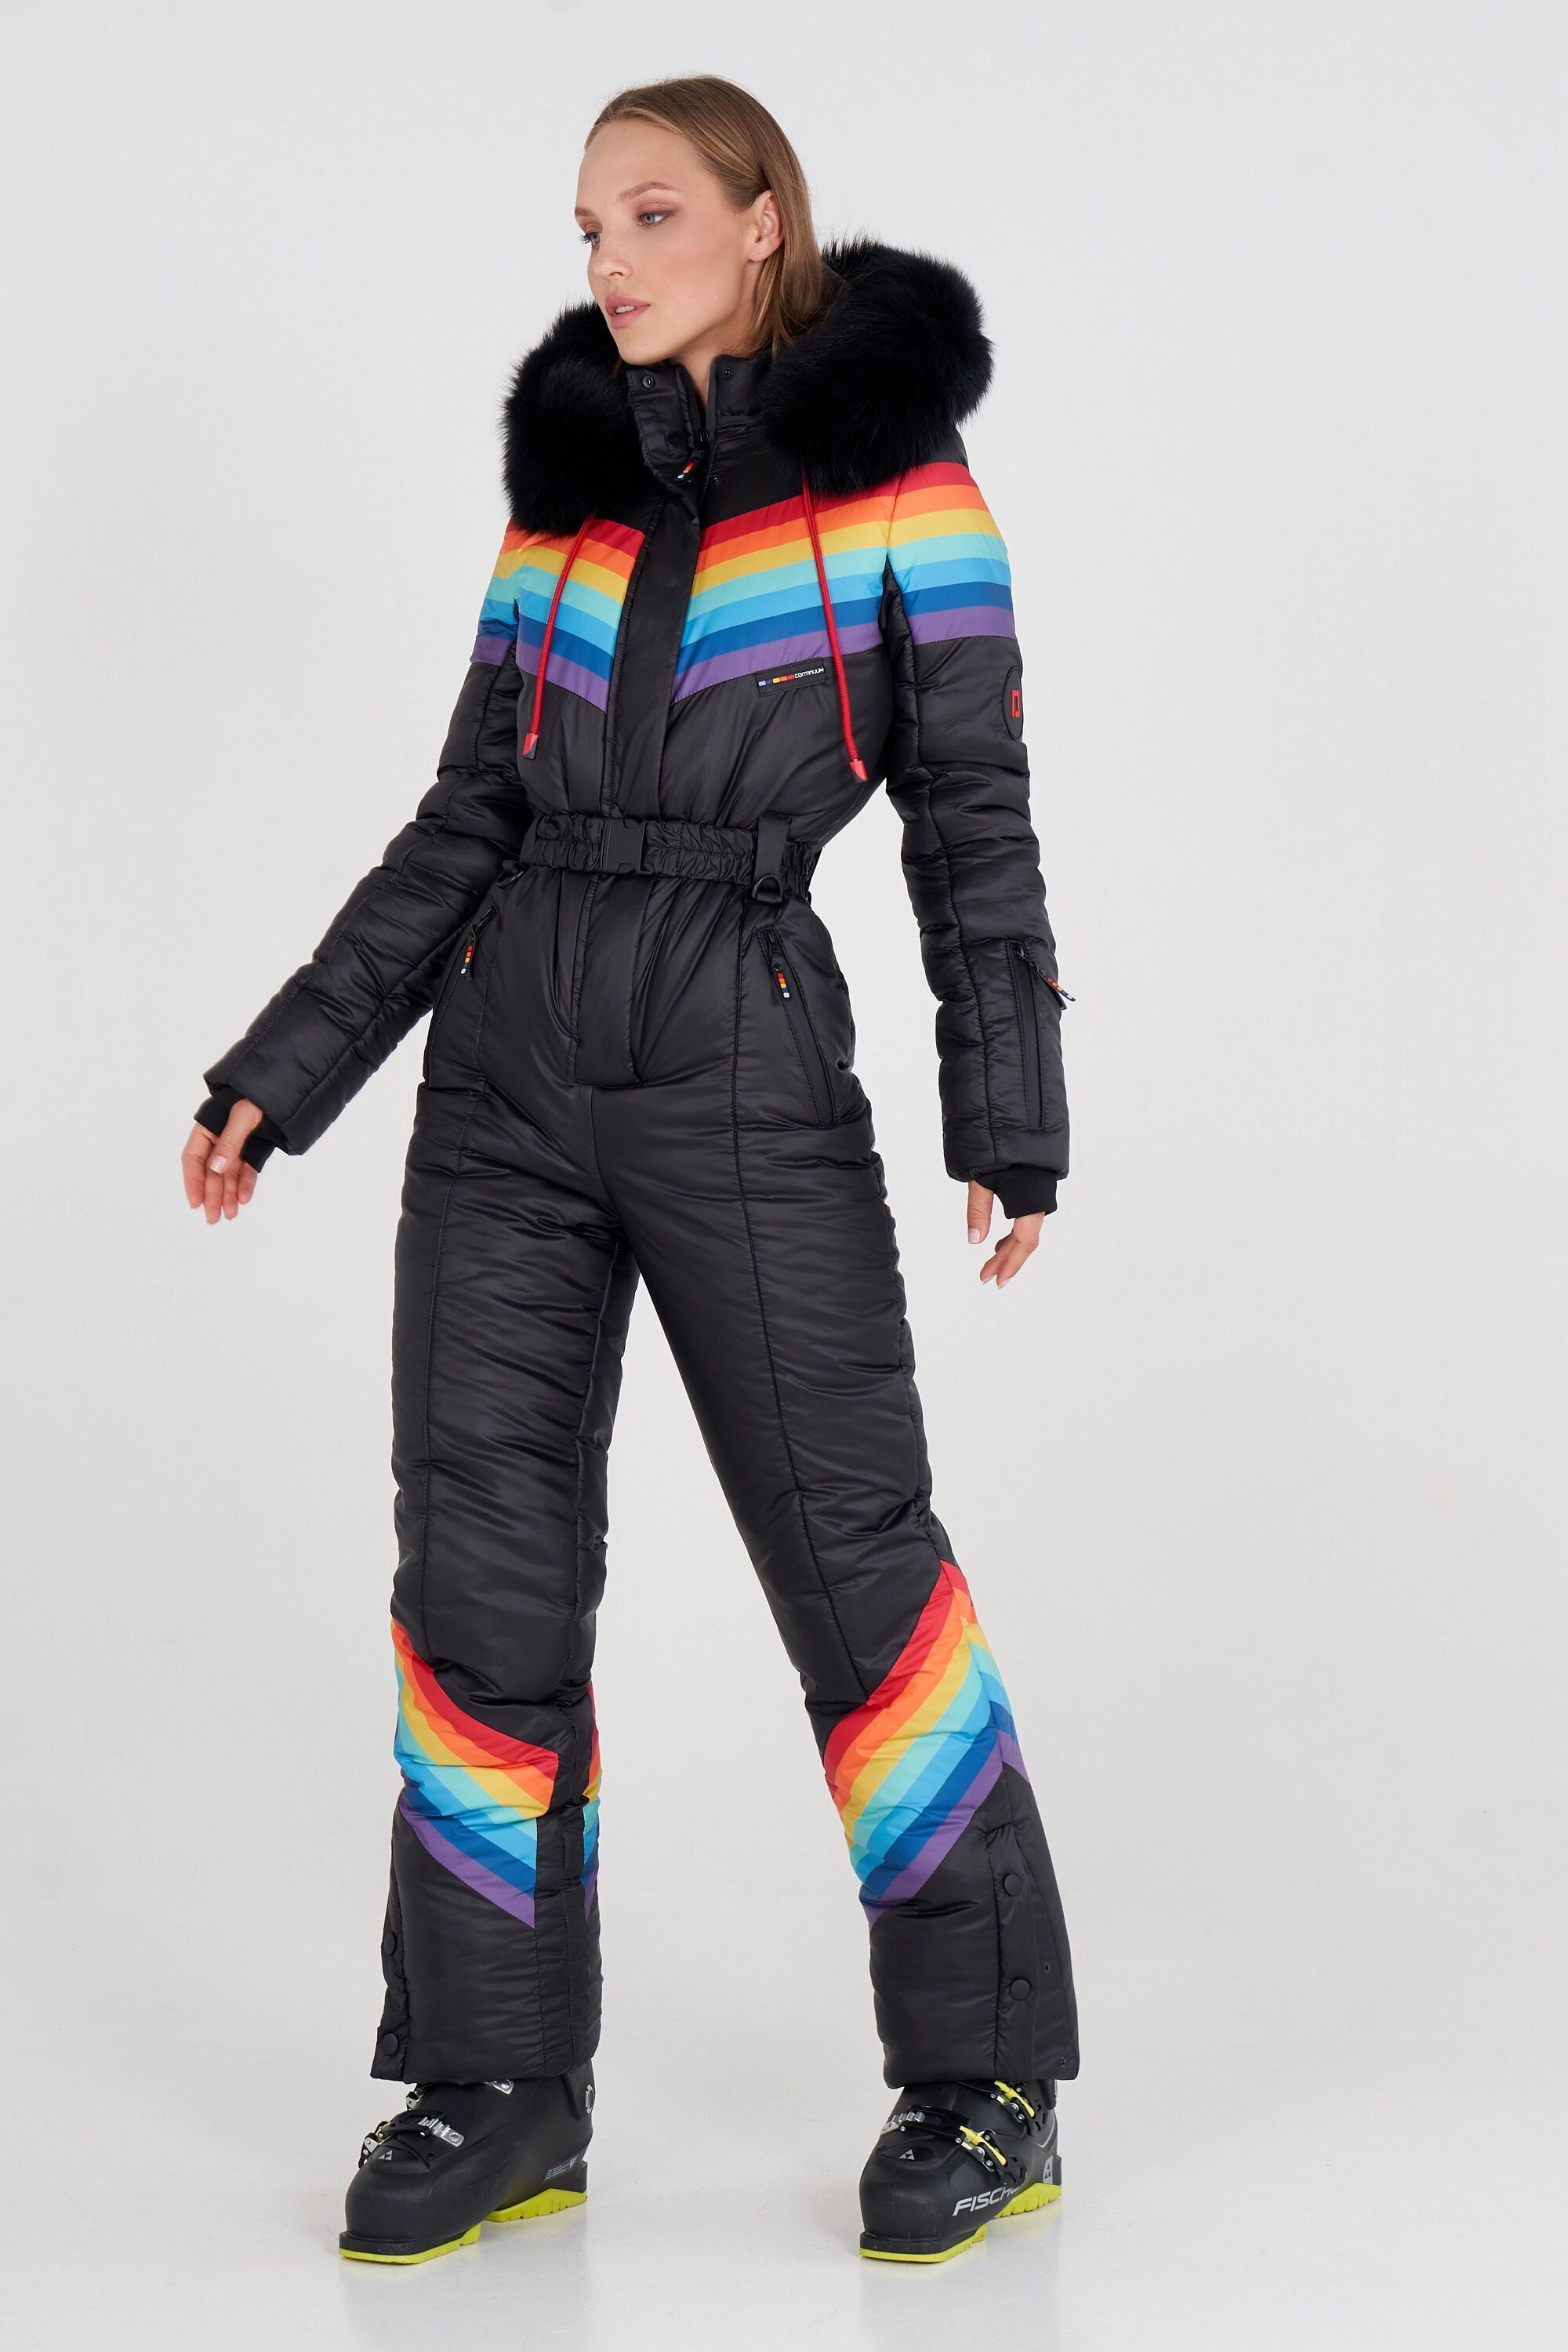 Womens Ski Suit Wiht Rainbow Black Womens Ski Suit Warm Jumpsuit